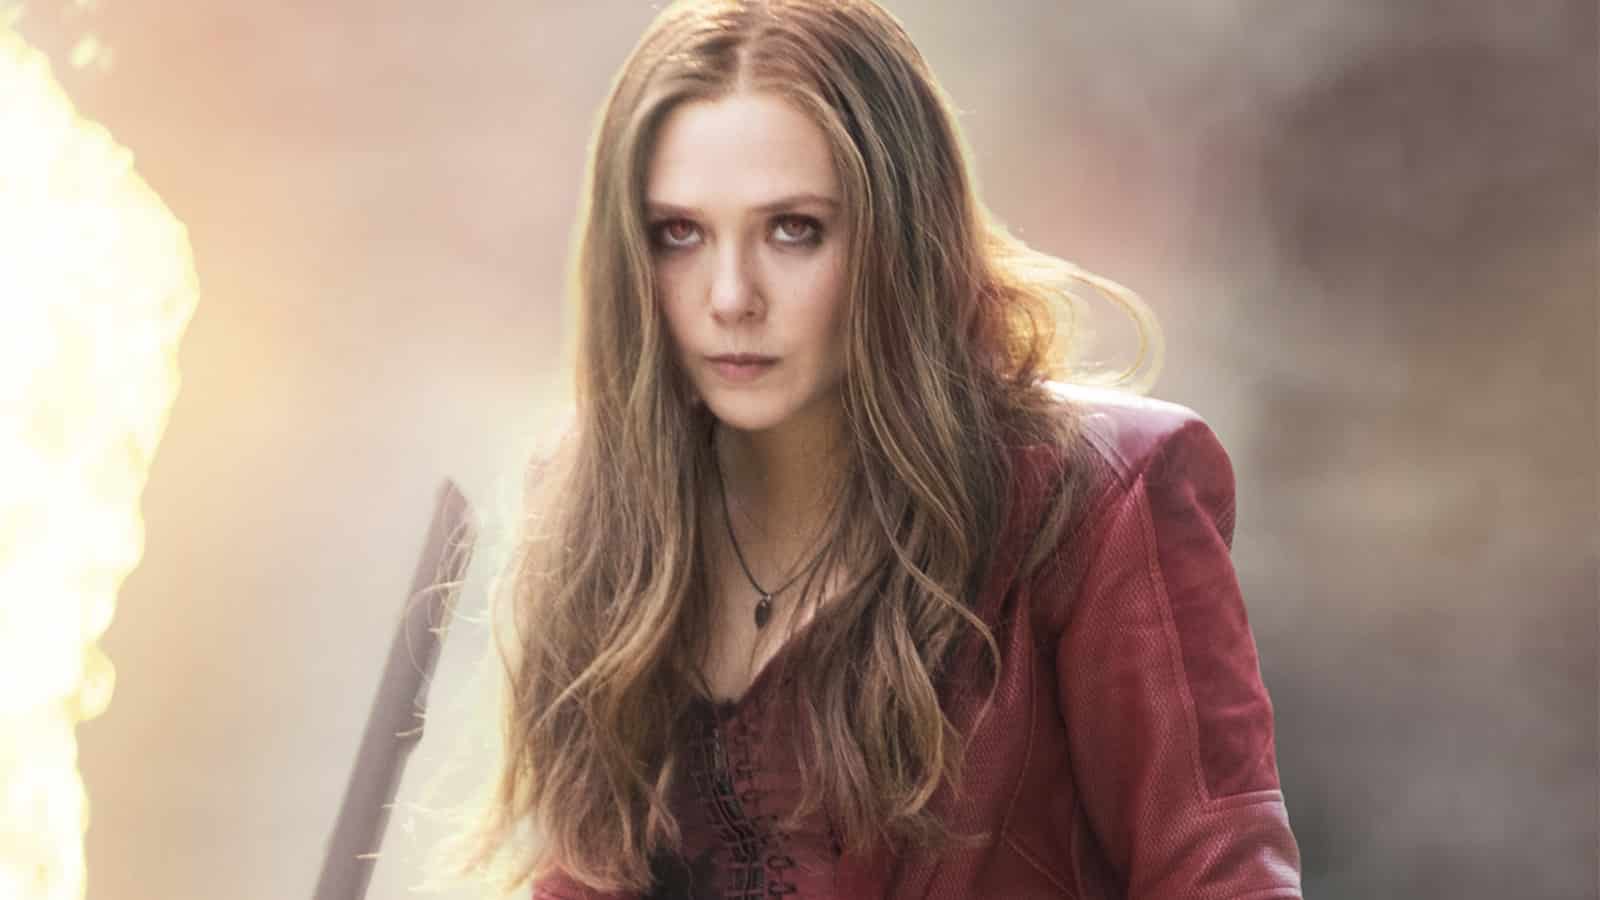 Elizabeth Olsen as Scarlet Witch